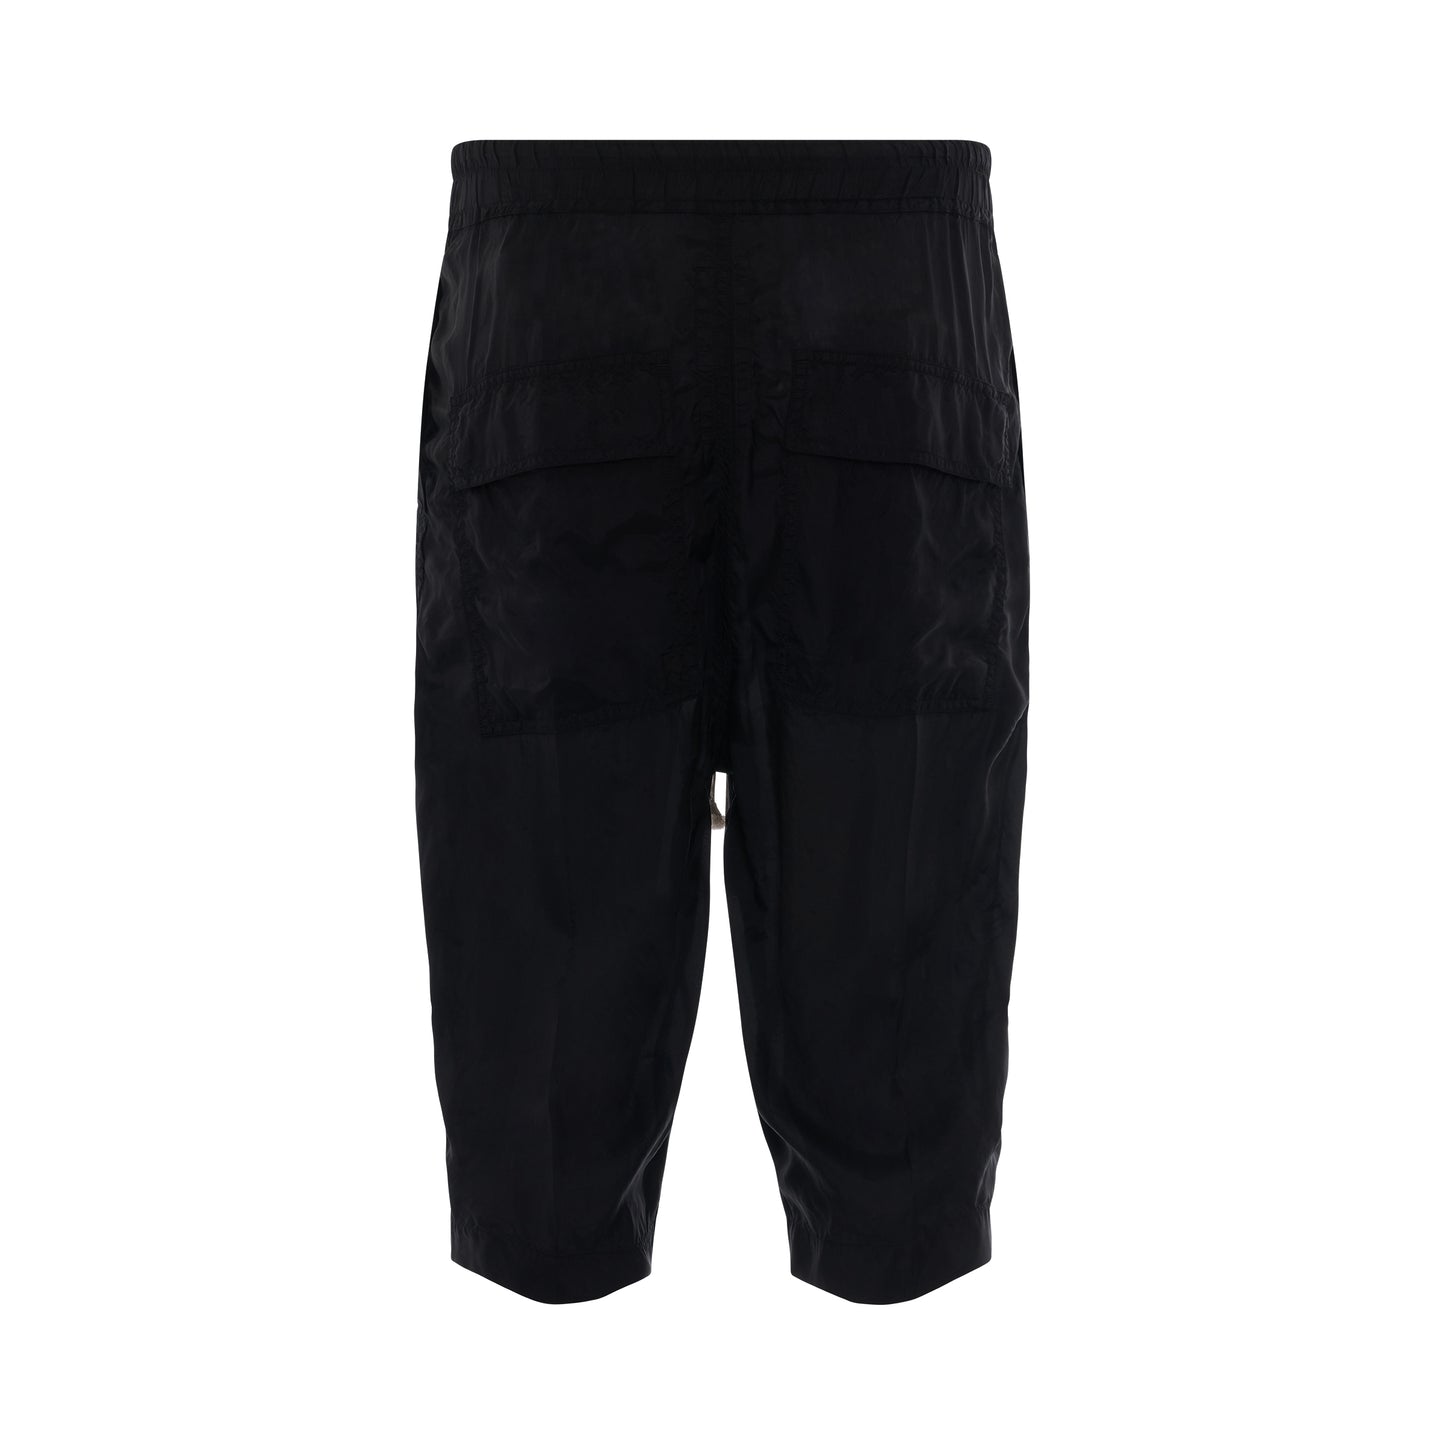 Fogcatcher Shorts in Black